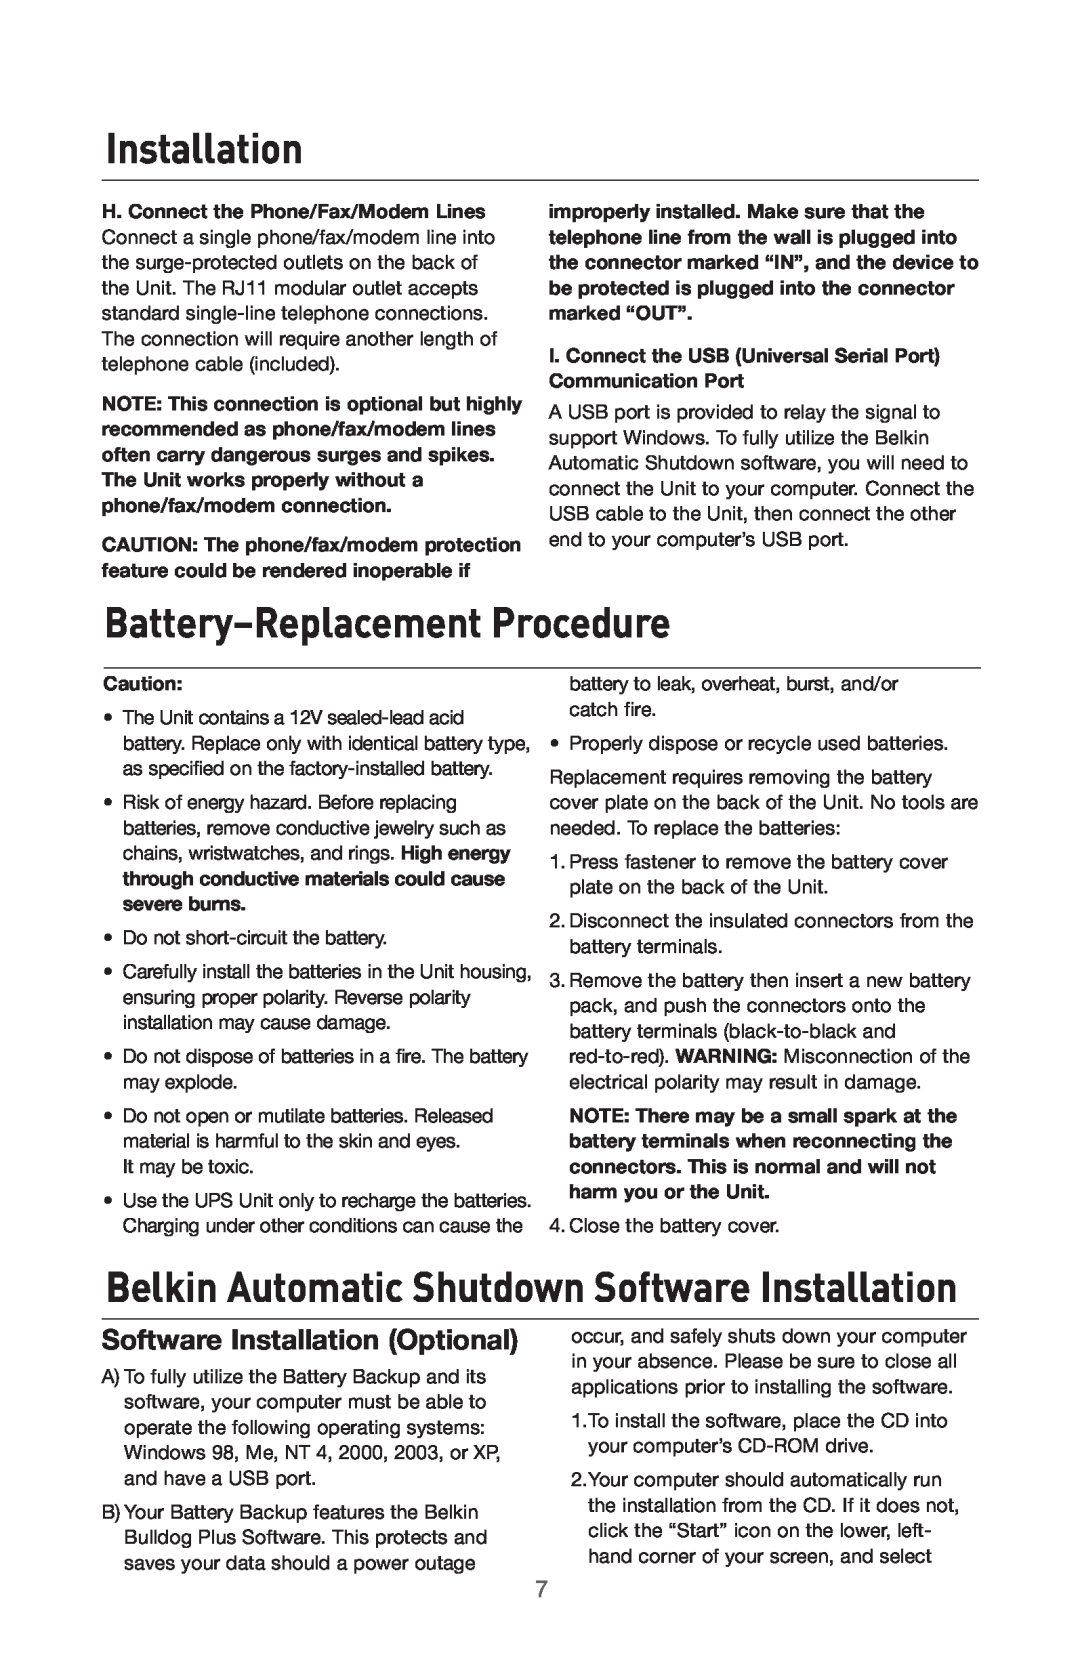 Belkin BU305500-USB user manual Battery-Replacement Procedure, Belkin Automatic Shutdown Software Installation 